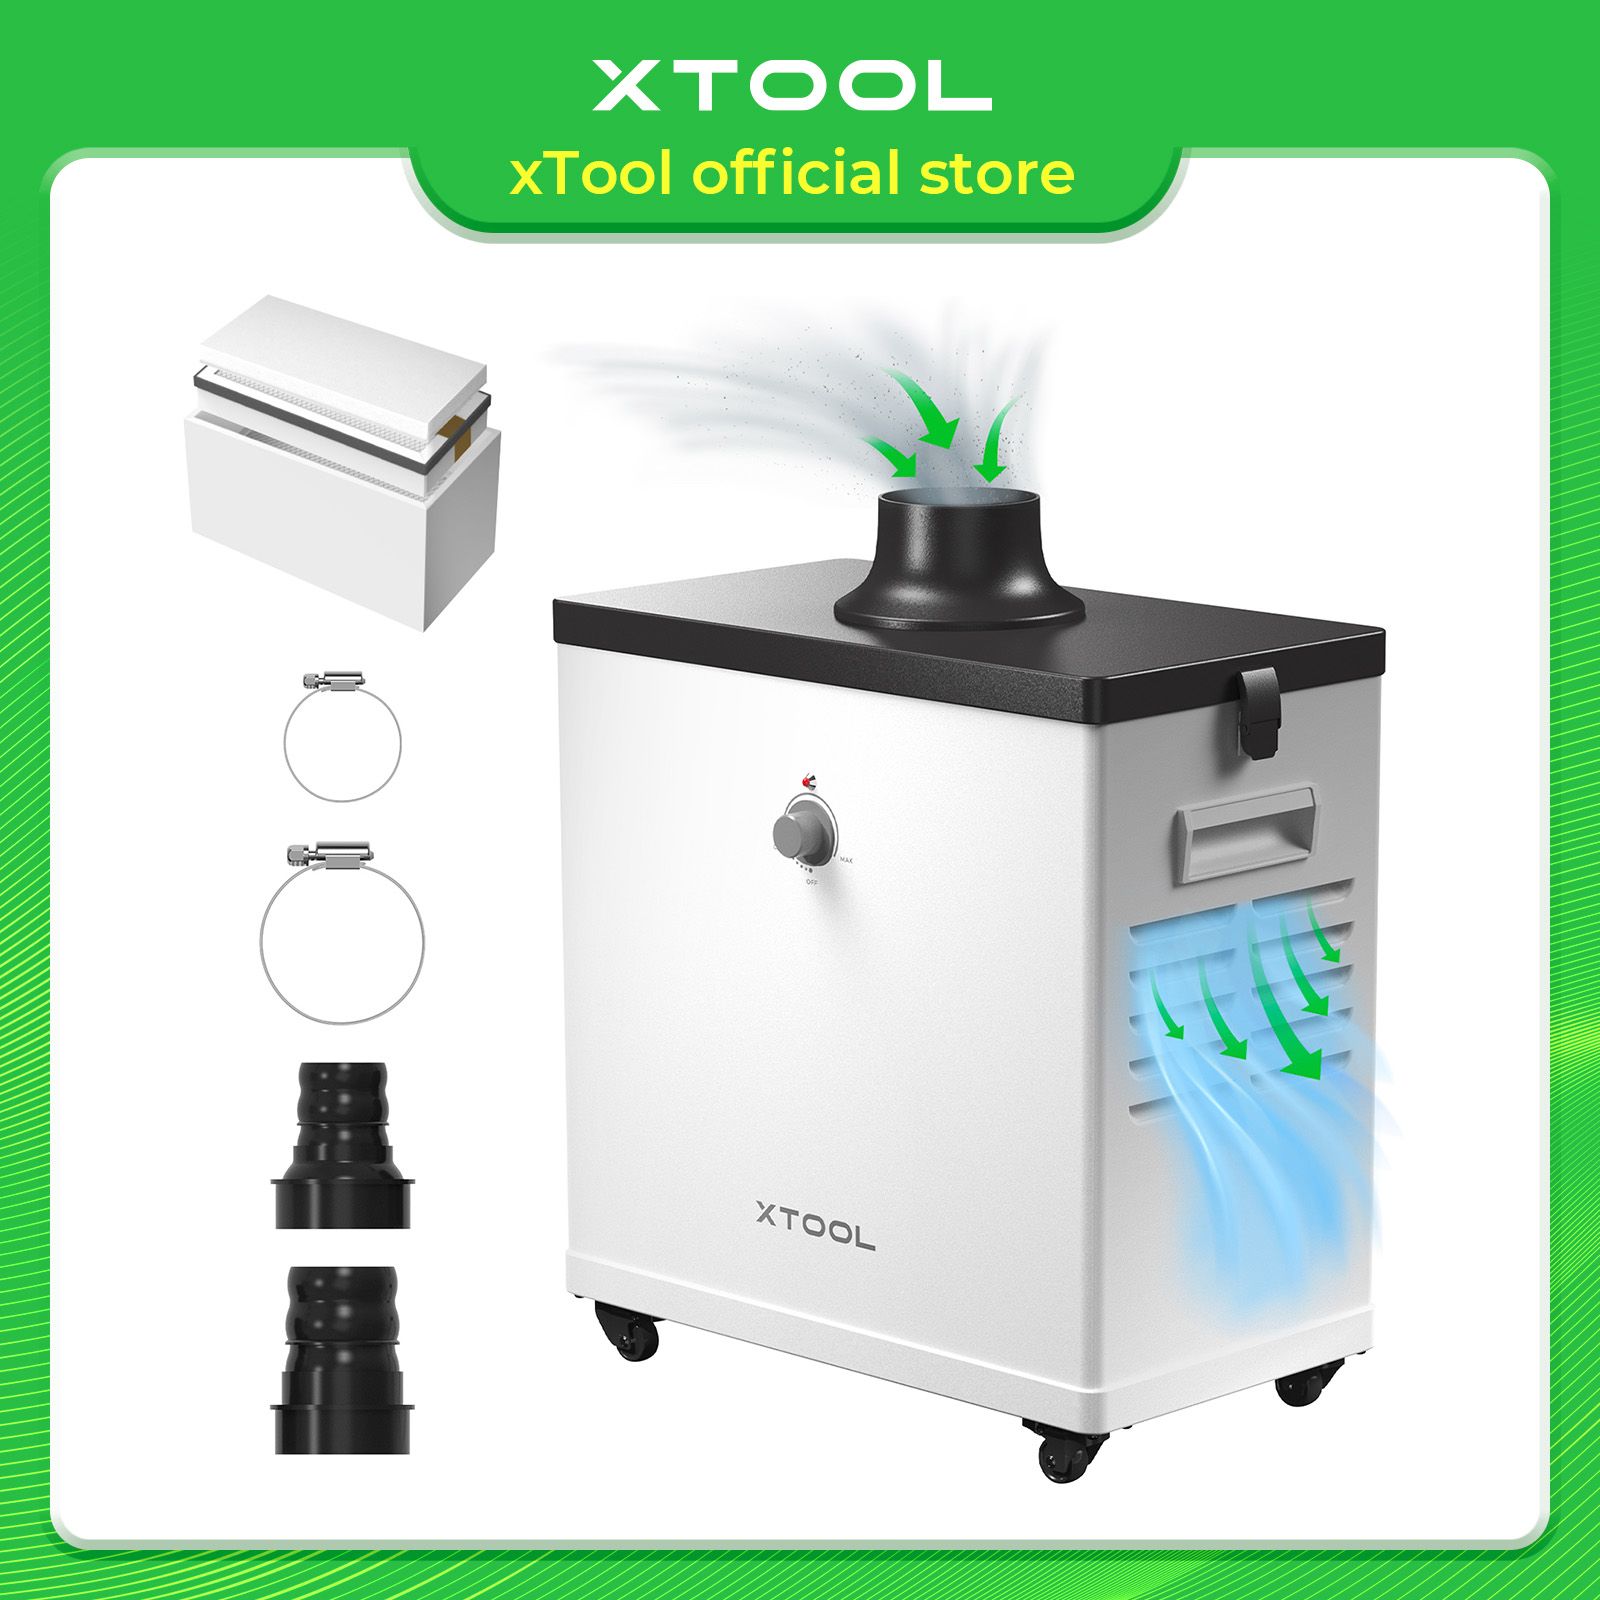  xTool F1 Desktop Smoke Air Purifier, Fume Extractor